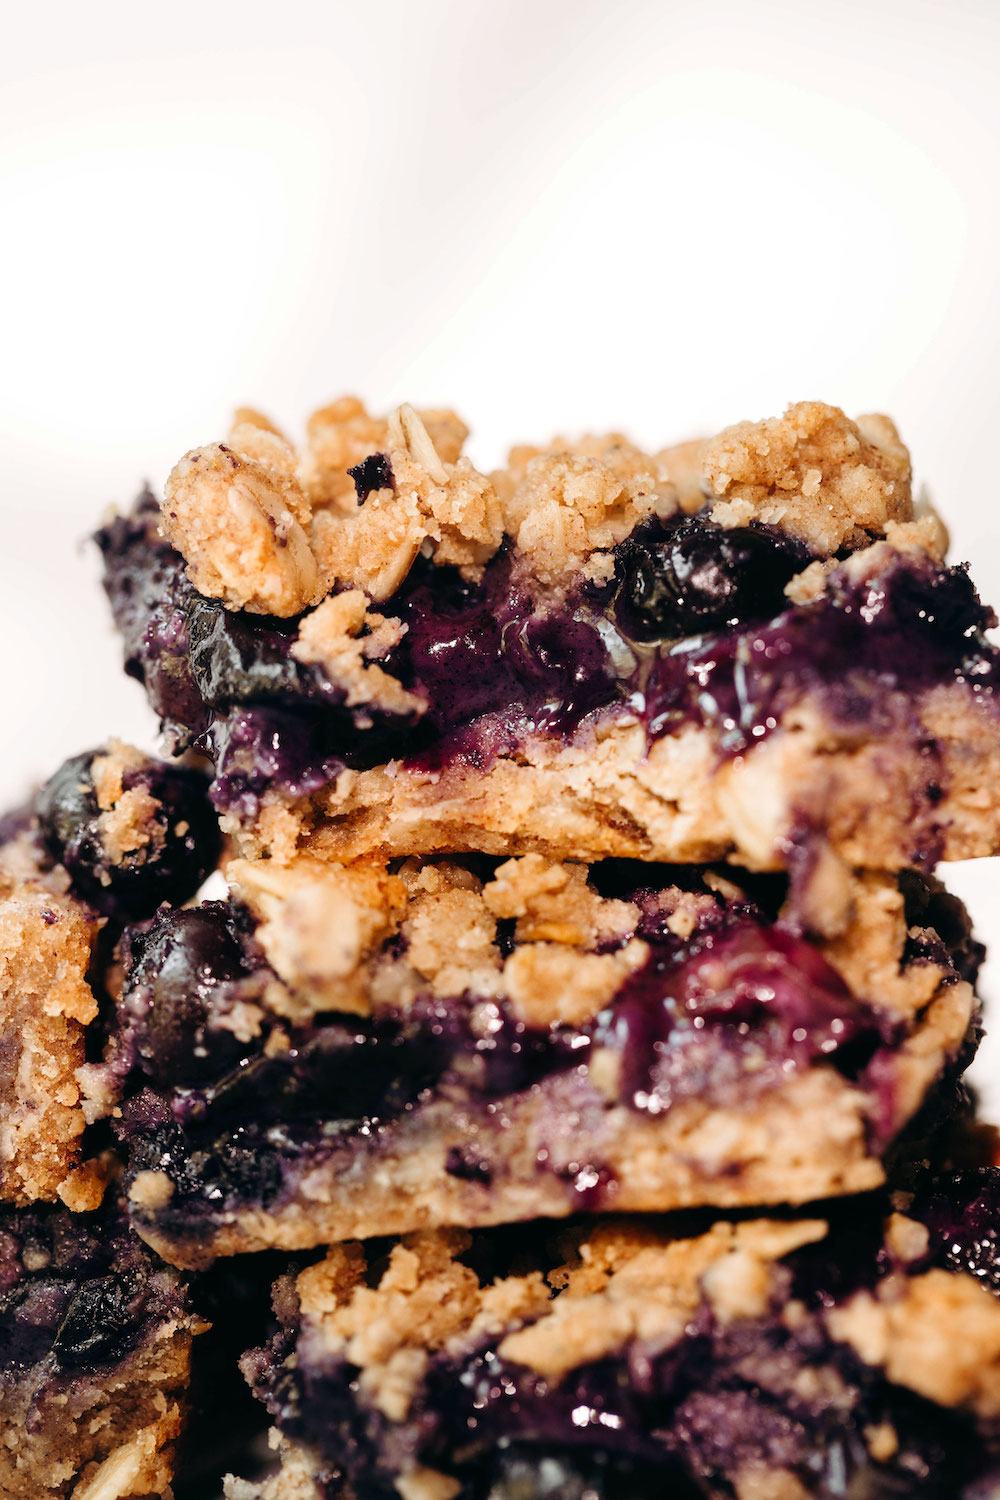 Healthy Blueberry Crumble Bars (vegan + gluten-free)